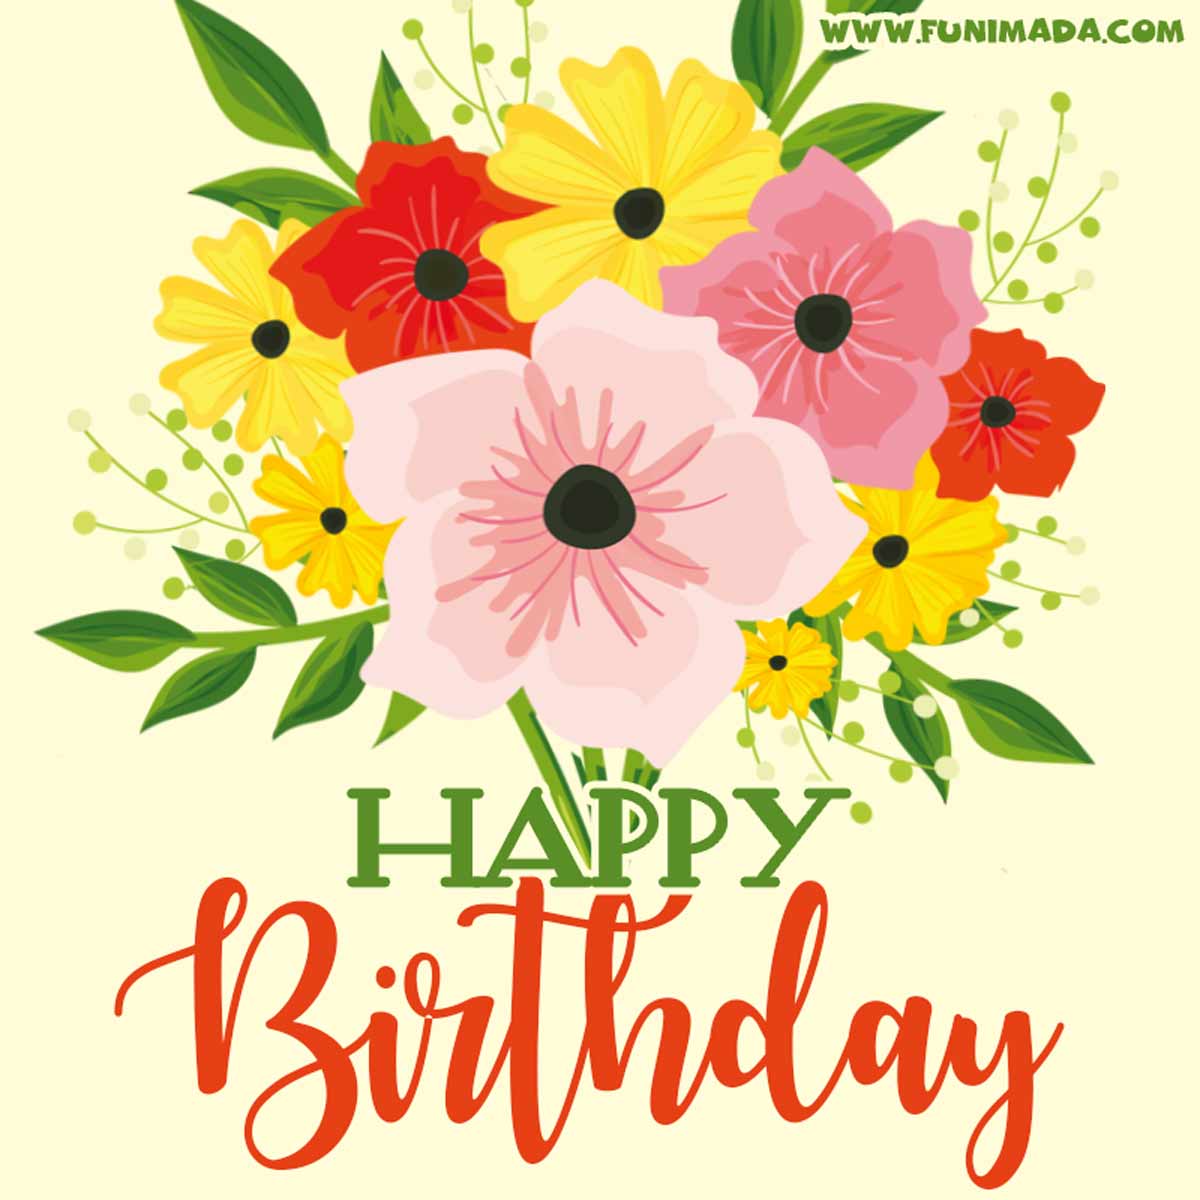 Flower Bouquet Happy Birthday Card (video) - Download Video on Funimada.com